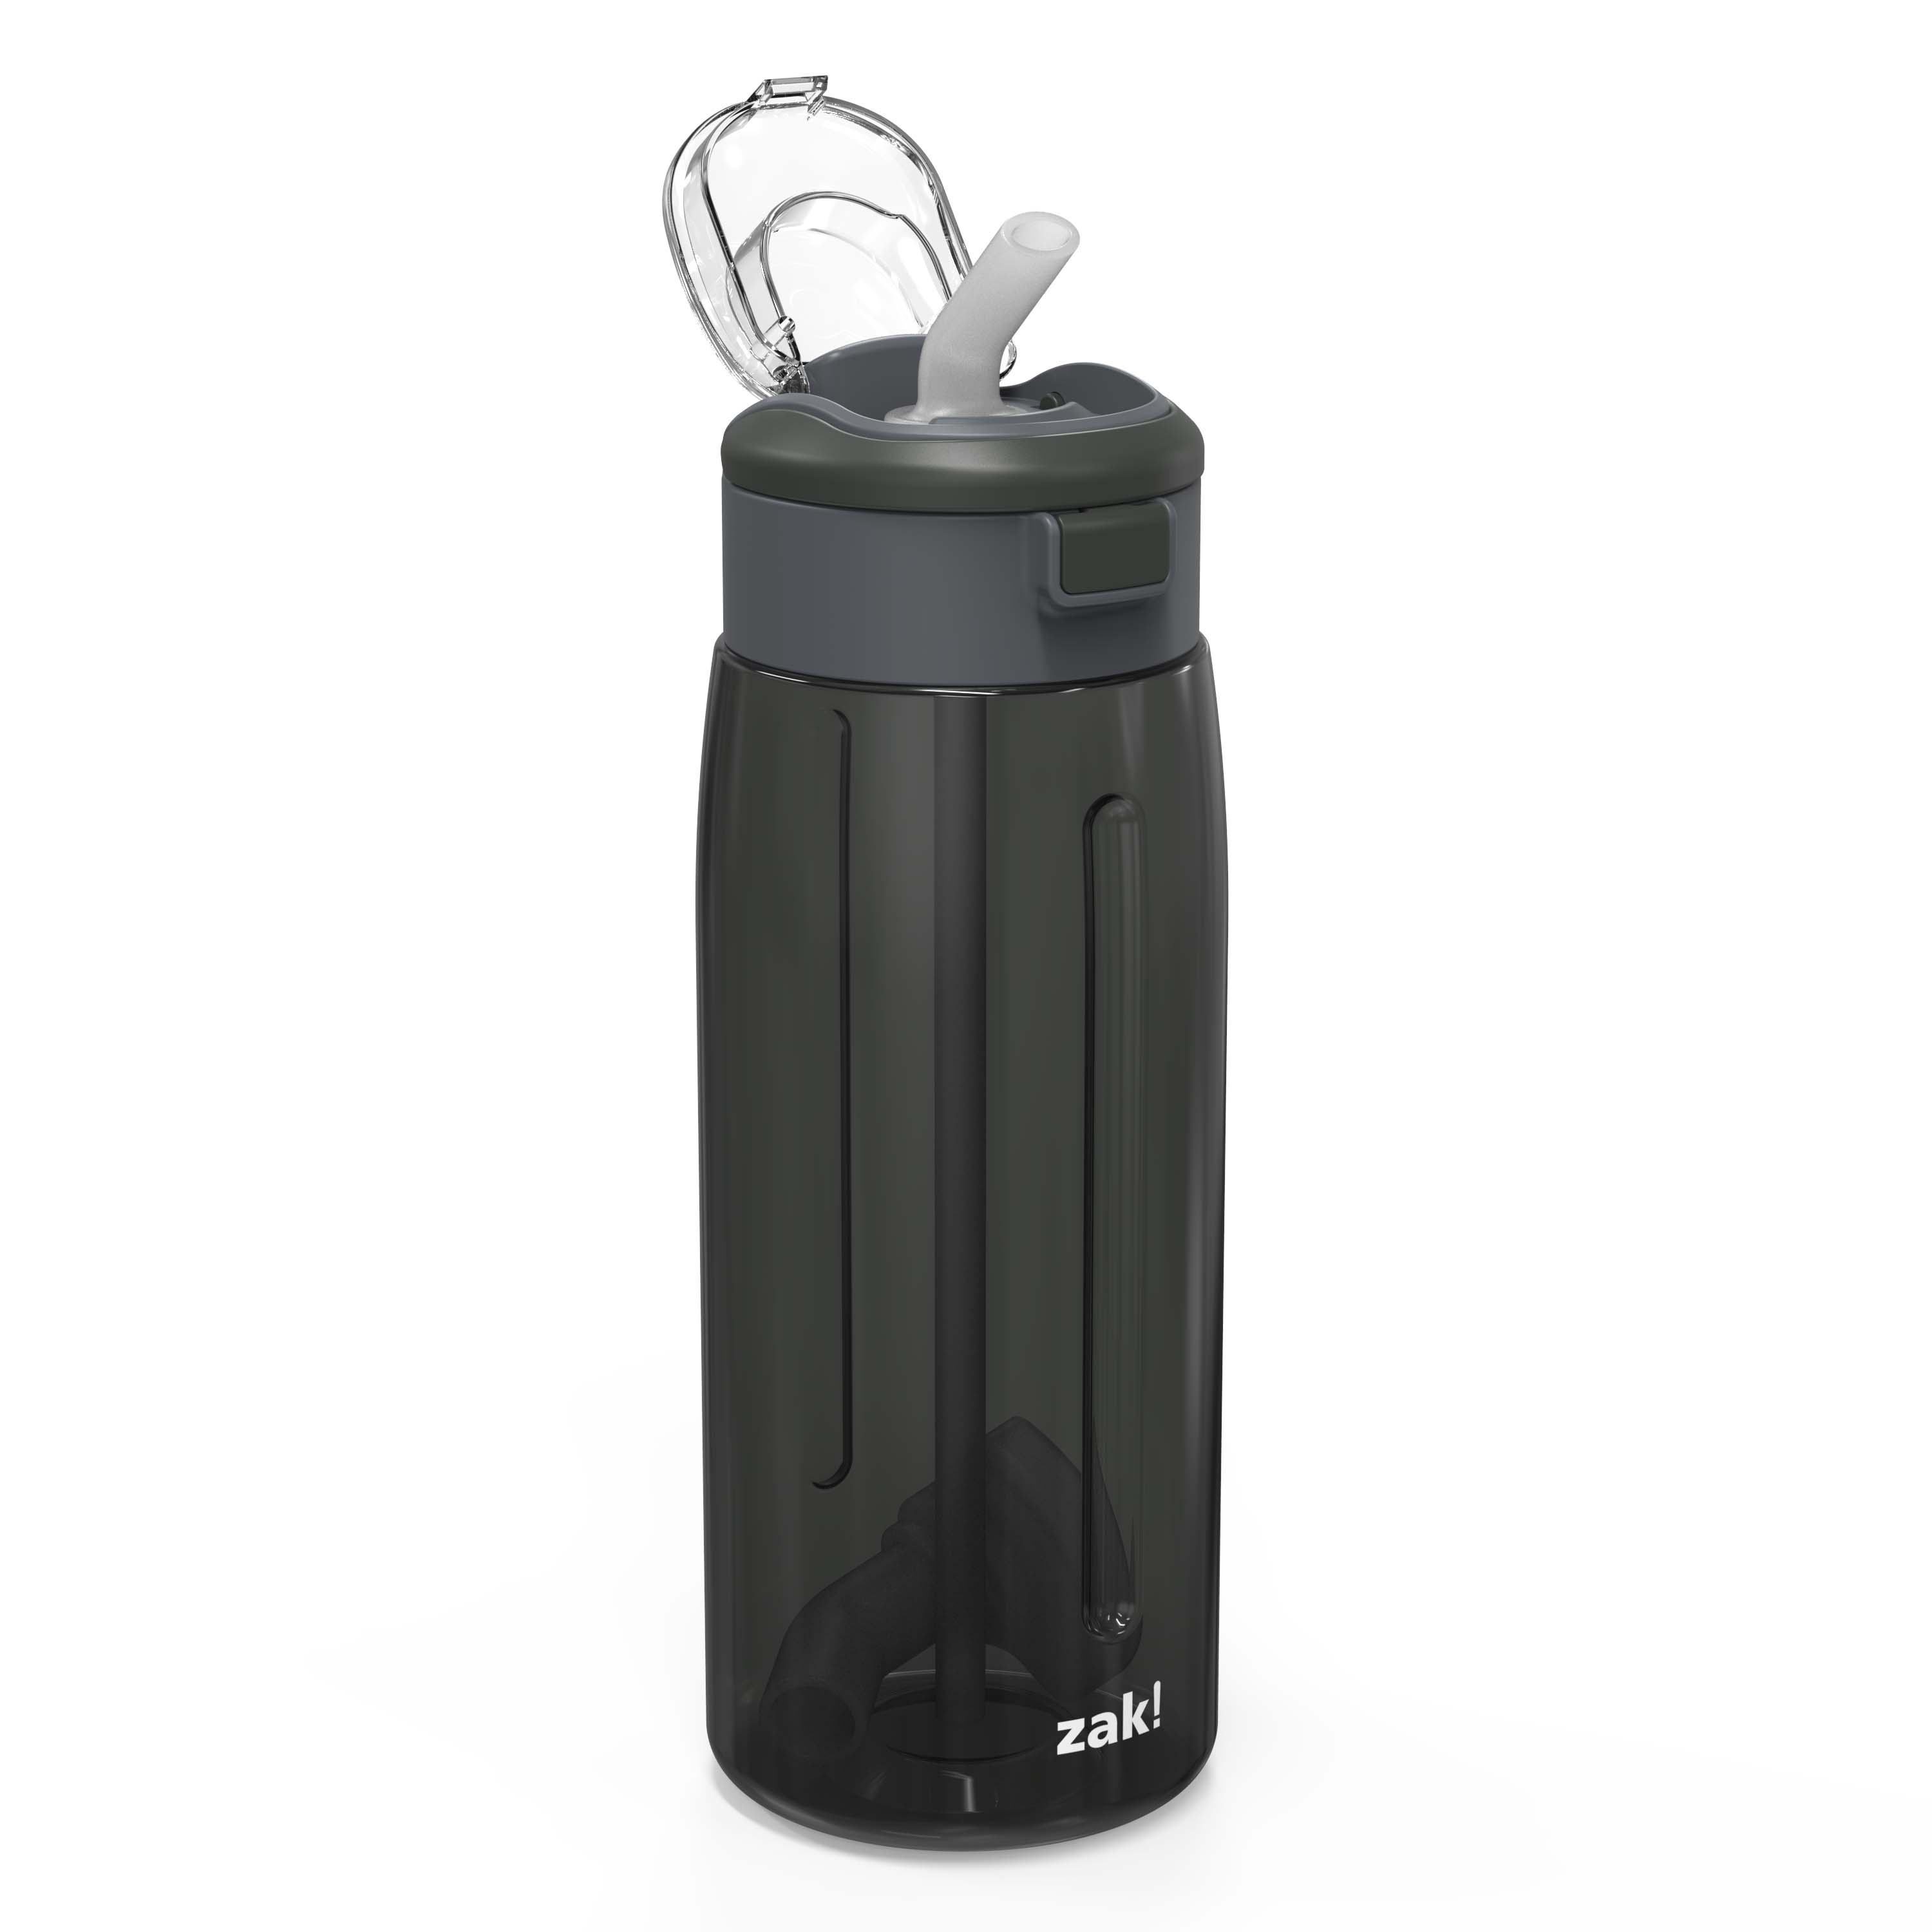 Genesis 32 ounce Reusable Plastic Water Bottle with Interchangeable Spouts, Charcoal slideshow image 5